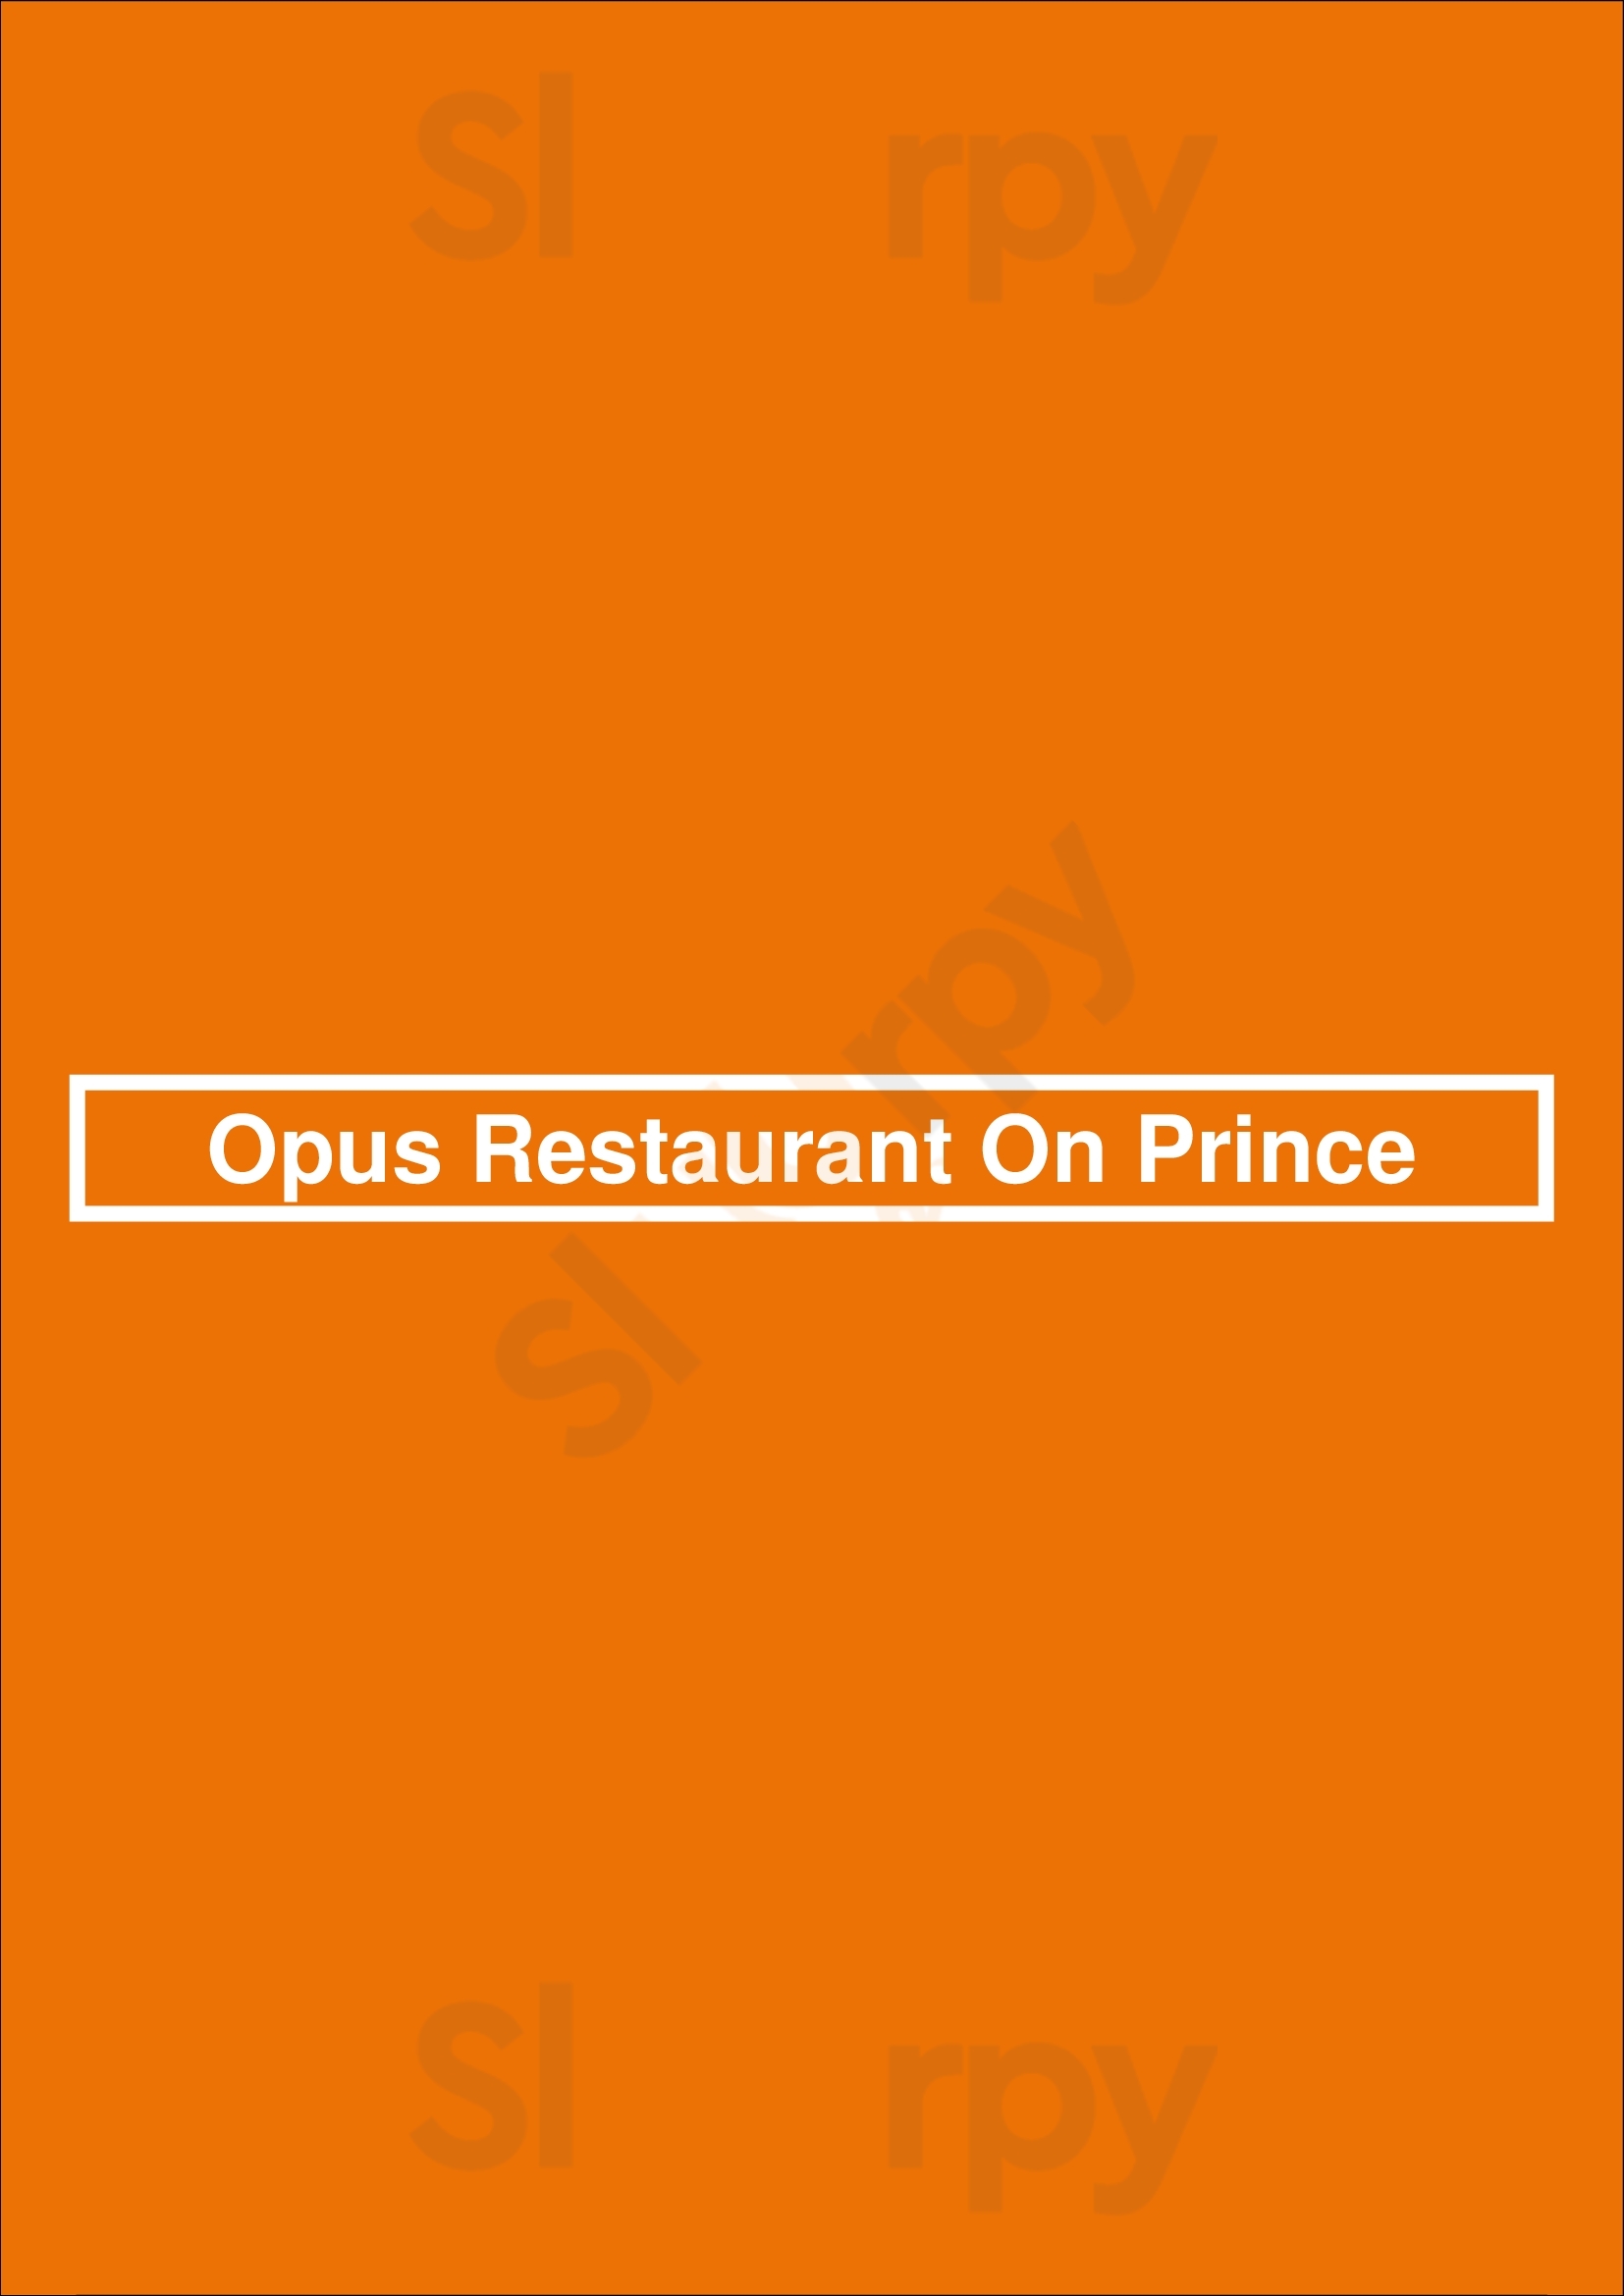 Opus Restaurant On Prince Toronto Menu - 1